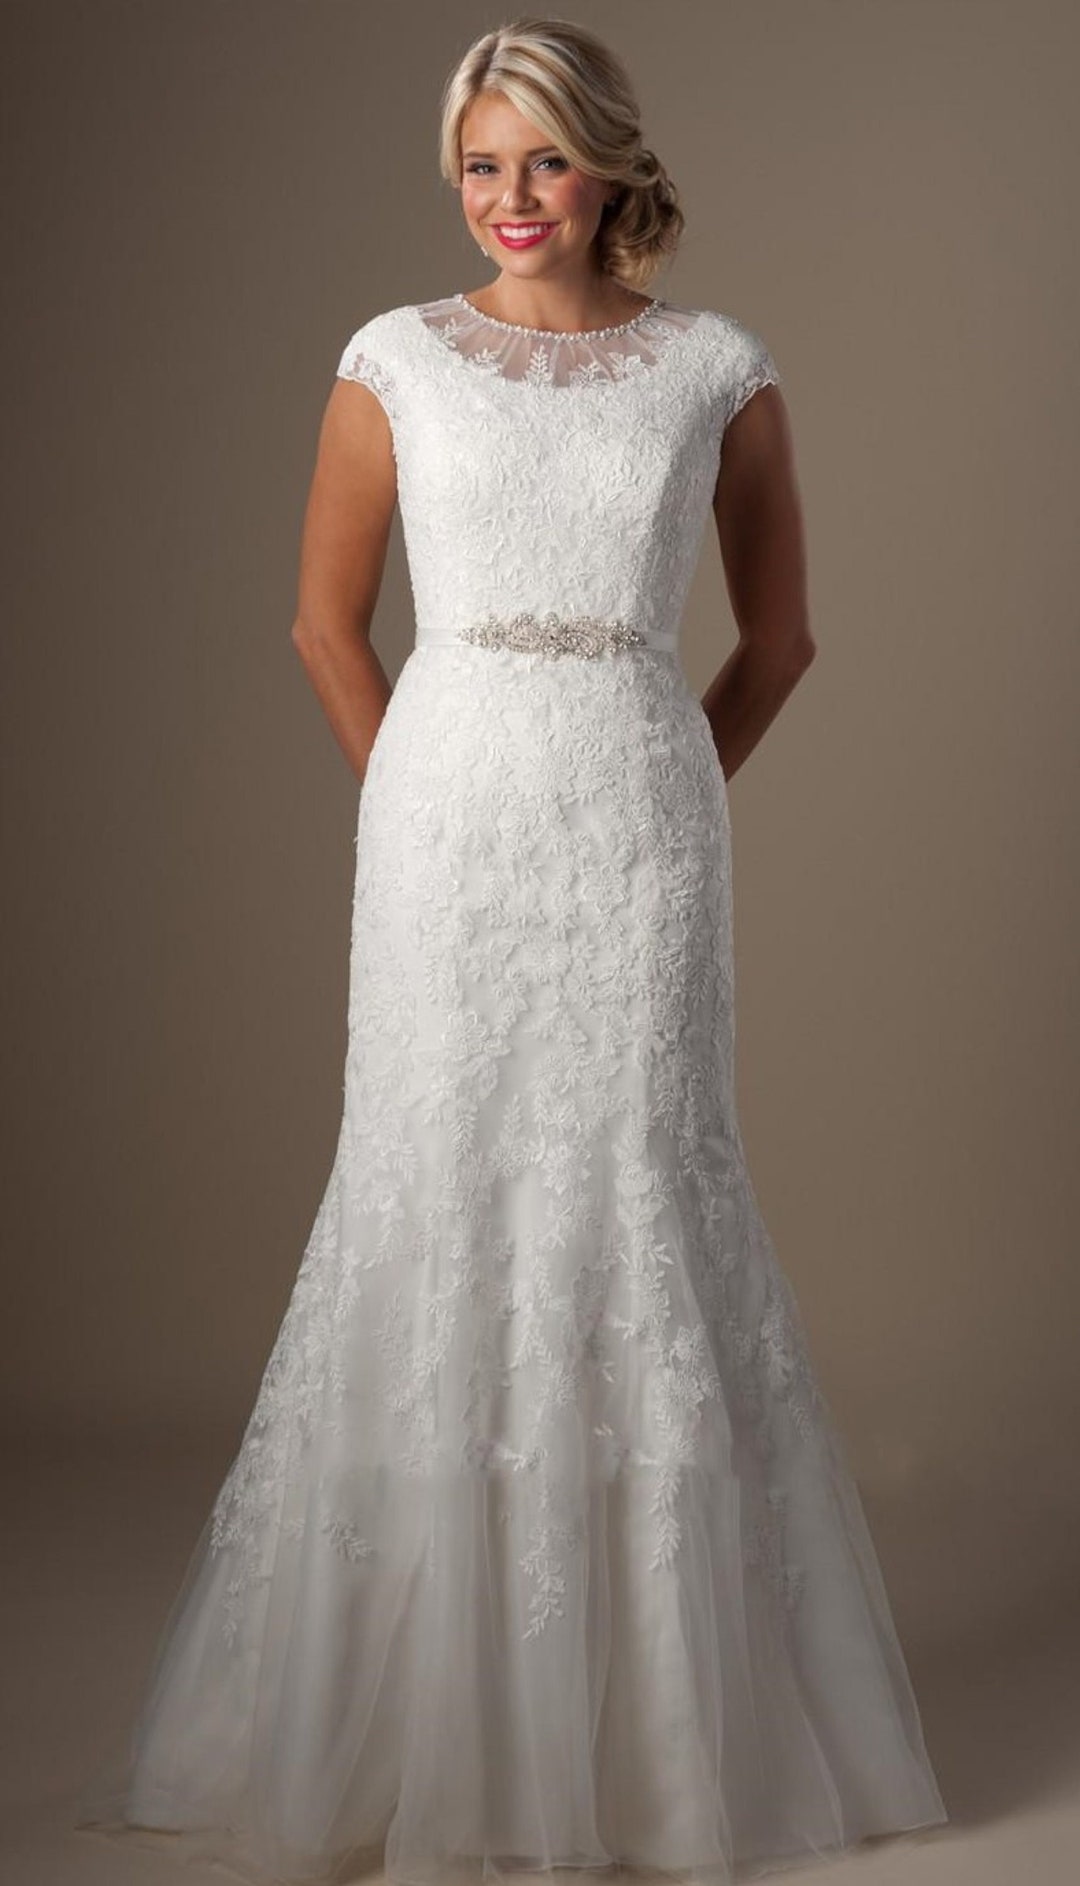 Elegant Modest Wedding Dress With Deluxe Lace High Neck Bodice - Etsy